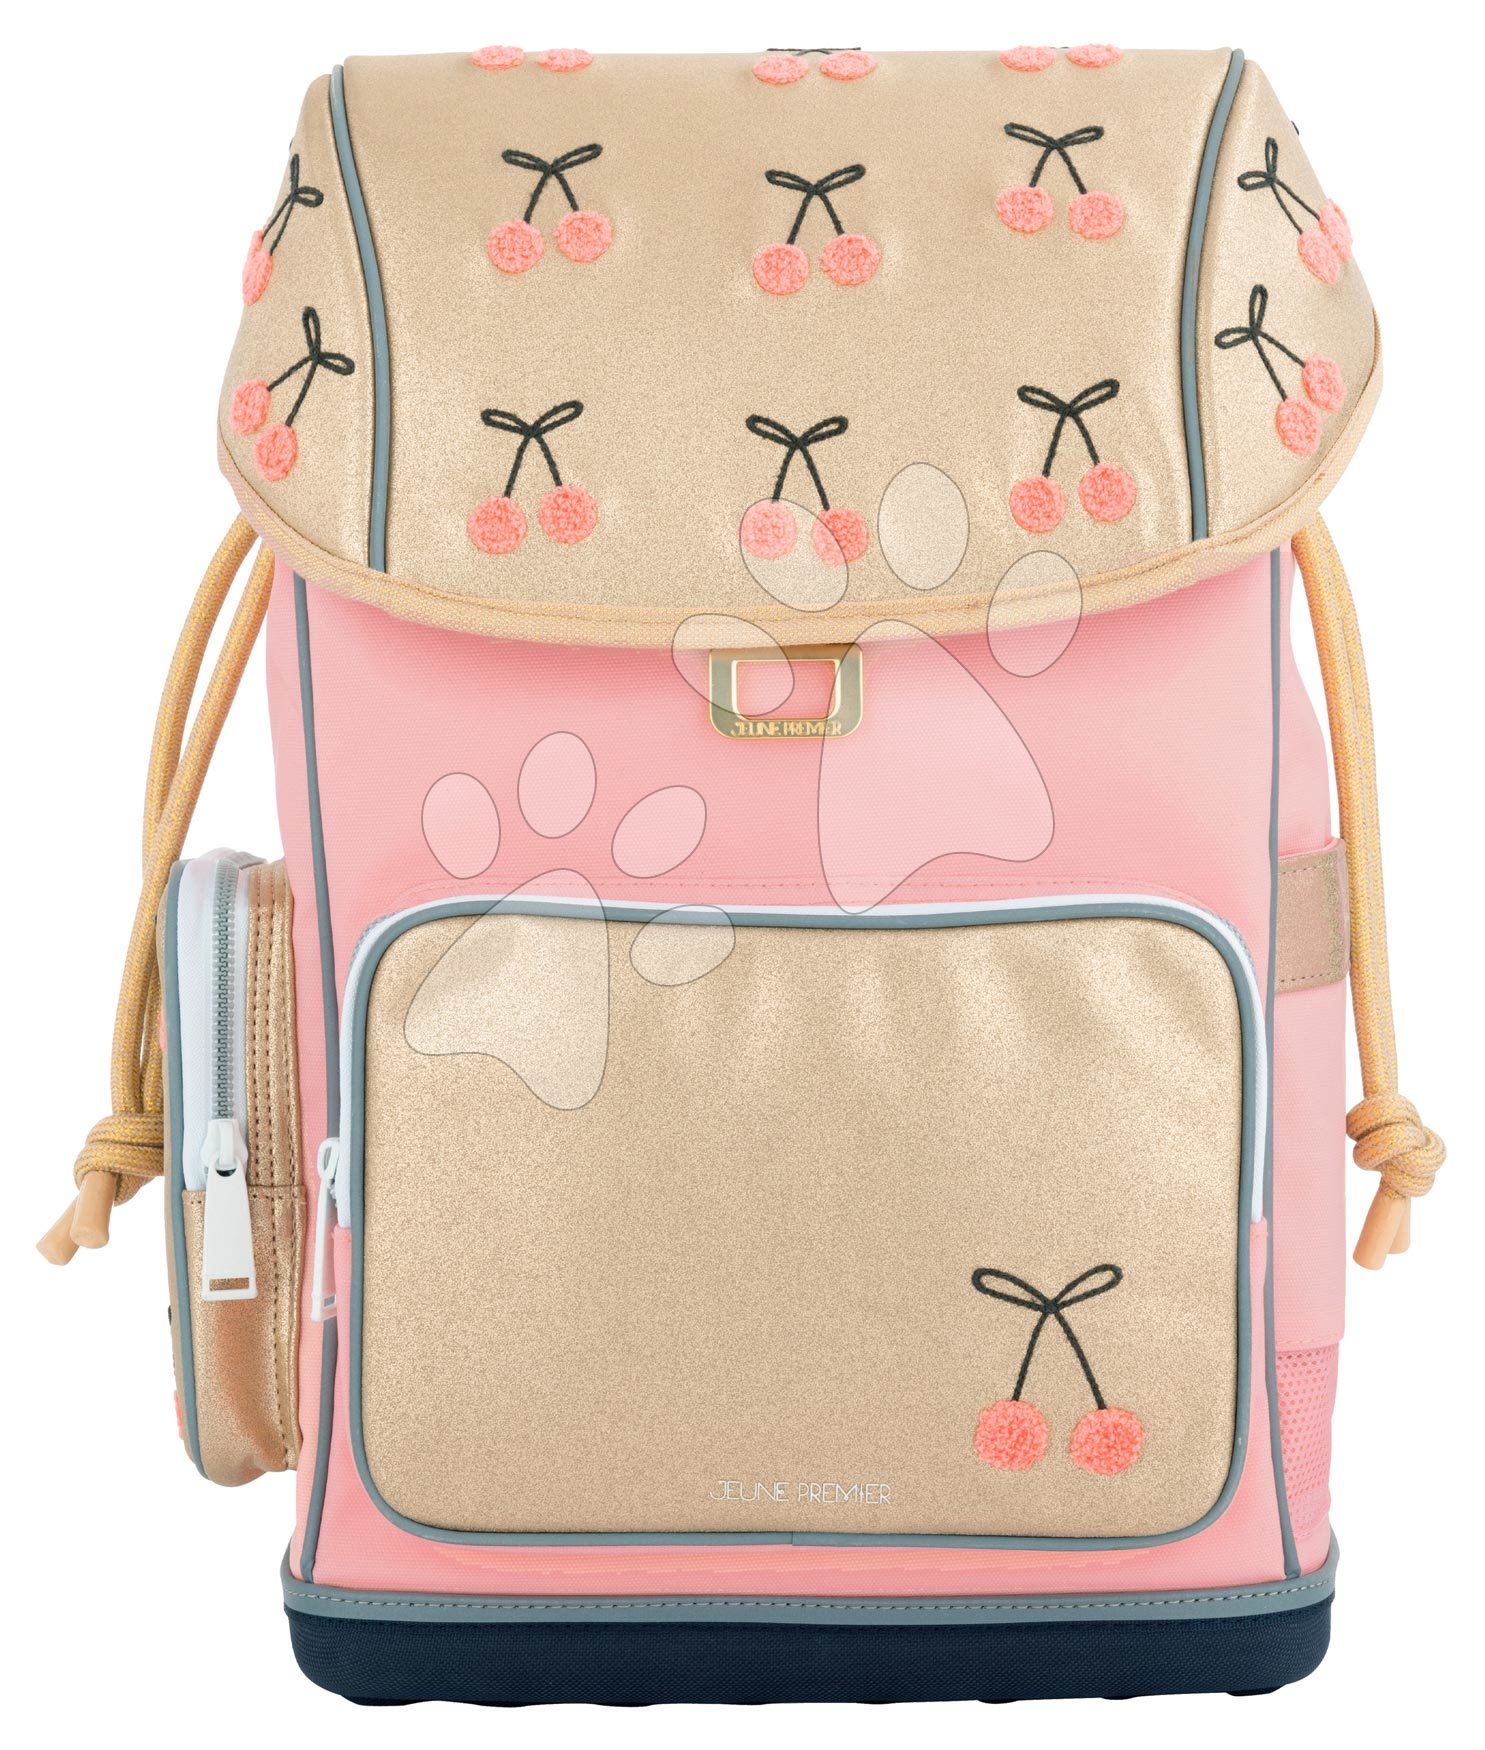 Školské tašky a batohy - Školský batoh veľký Ergonomic Backpack Cherry Pompon Jeune Premier ergonomický luxusné prevedenie 39*26 cm